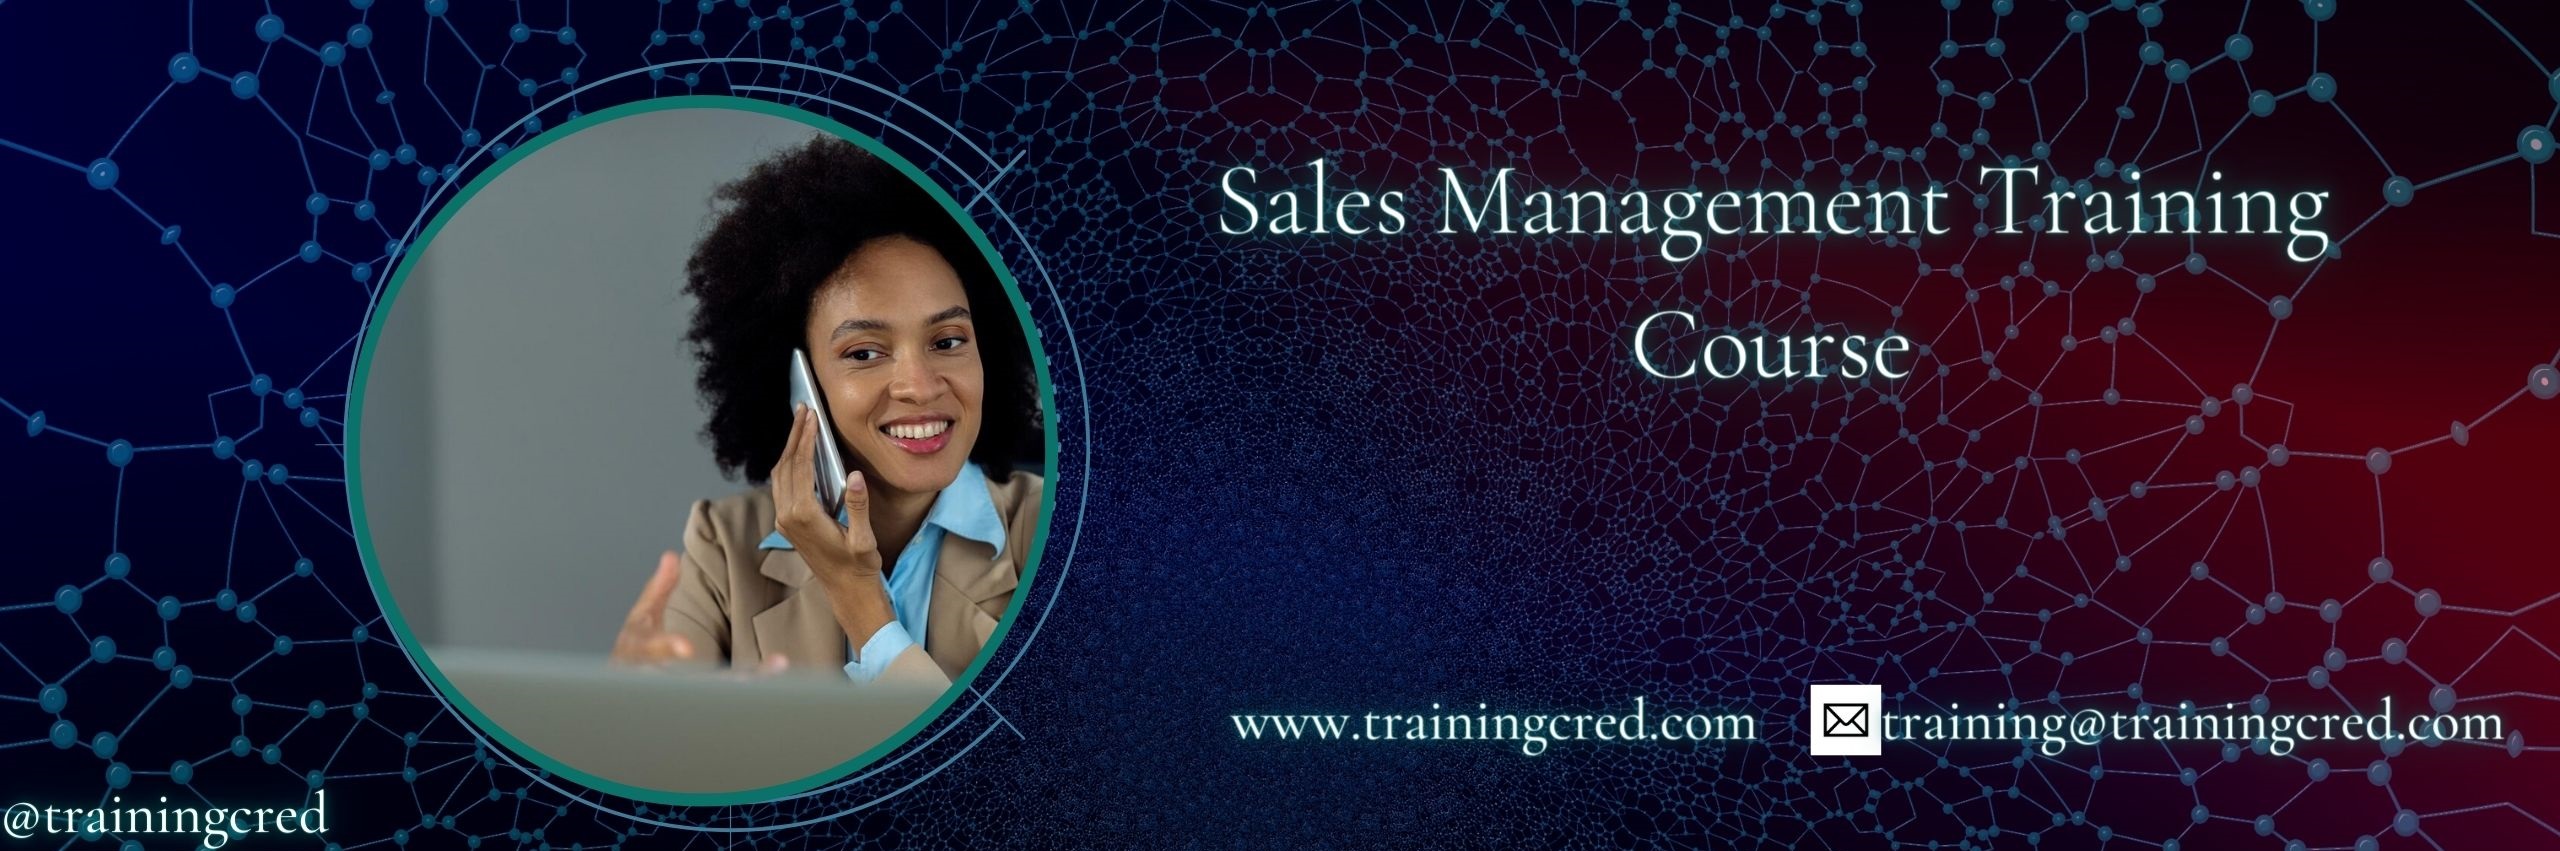 Sales Management Training